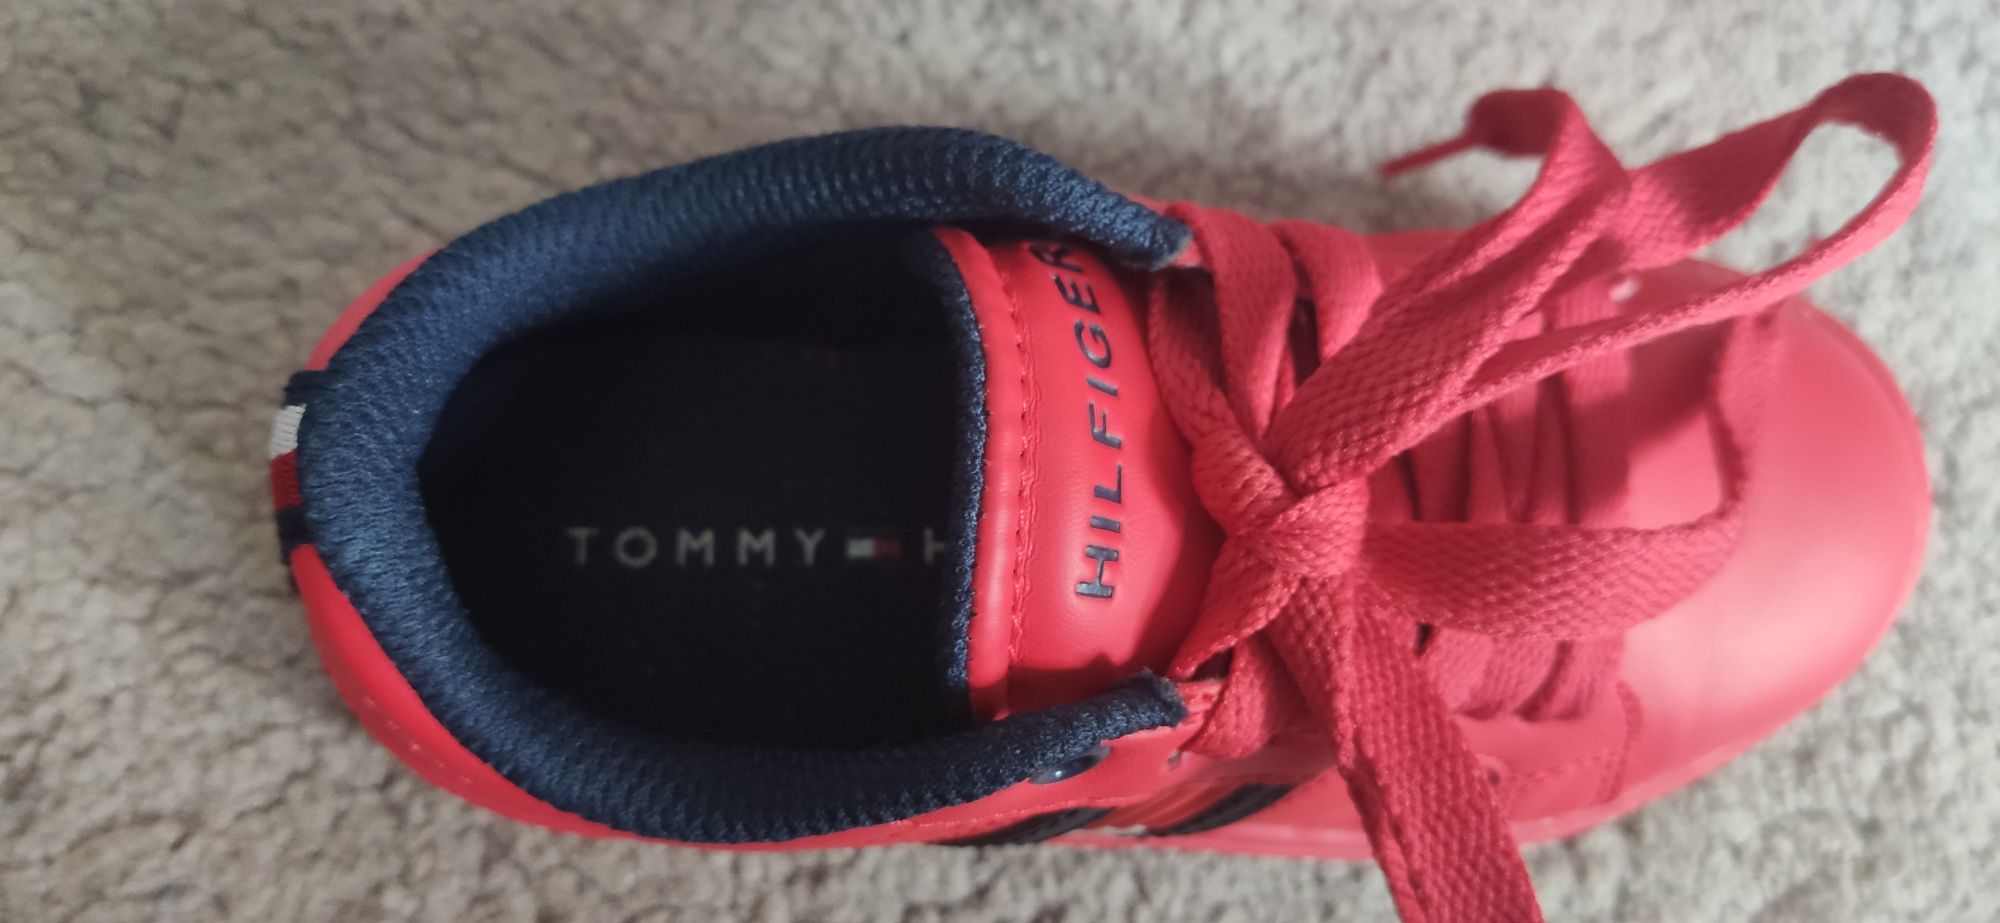 Tommy Hilfiger 27,5 USA 11 jak nowe buty tenisówki sneakersy